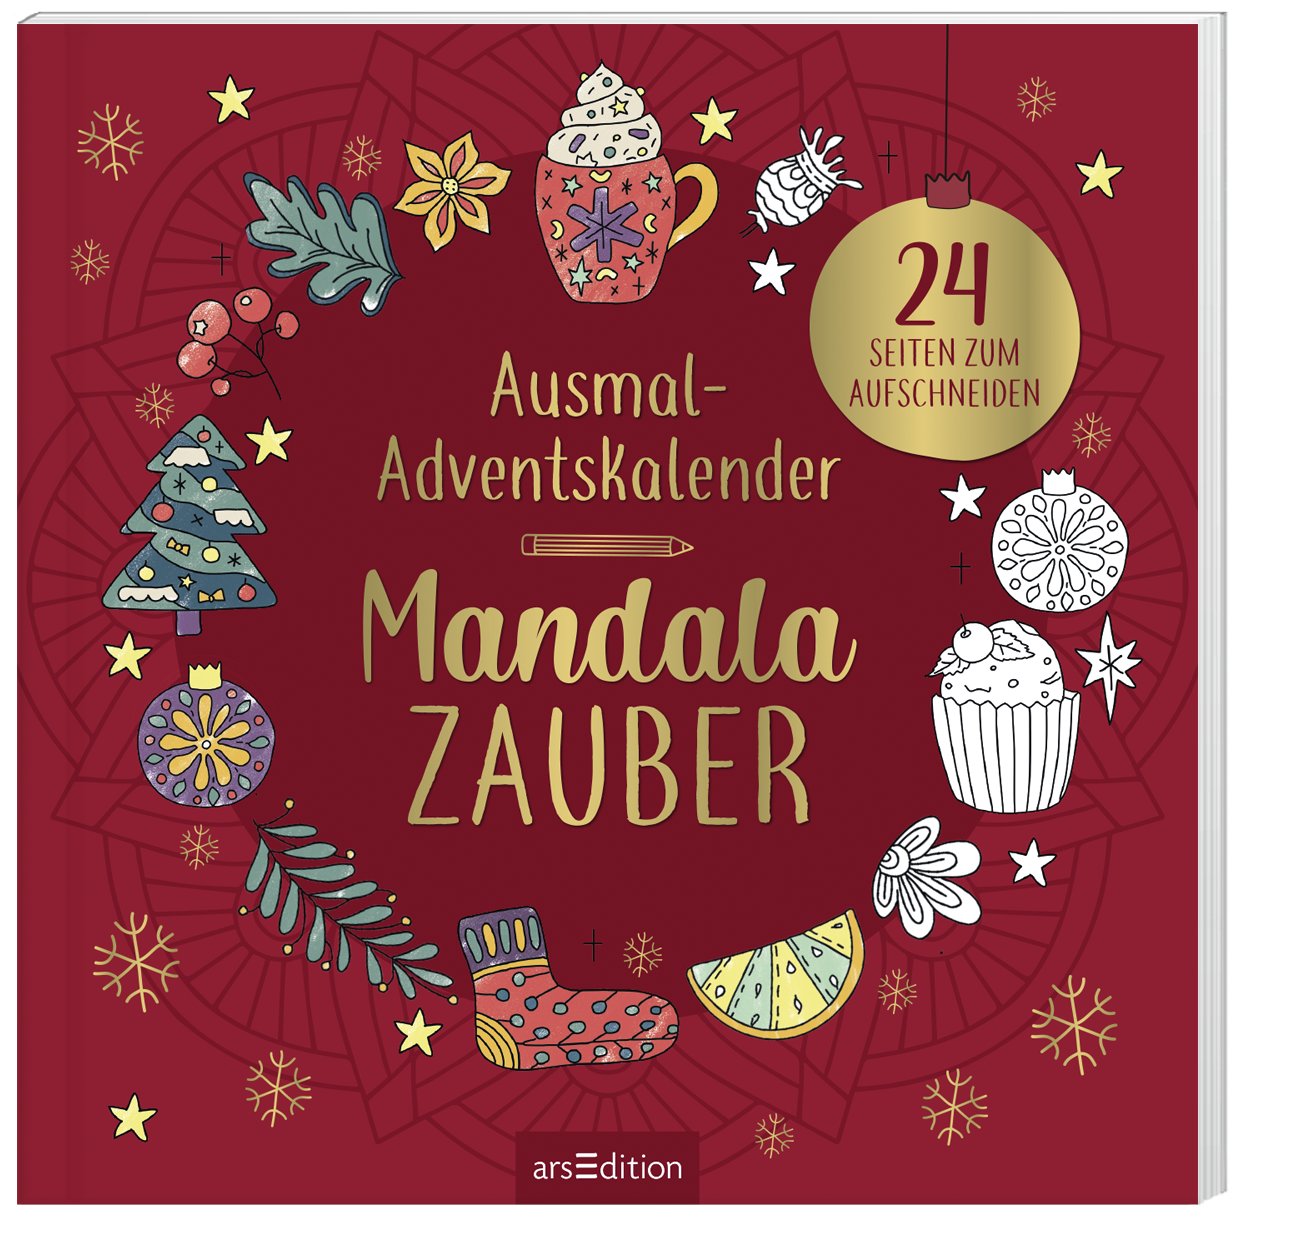 Ausmal-Adventskalender Mandala-Zauber bestellen | Weltbild.de